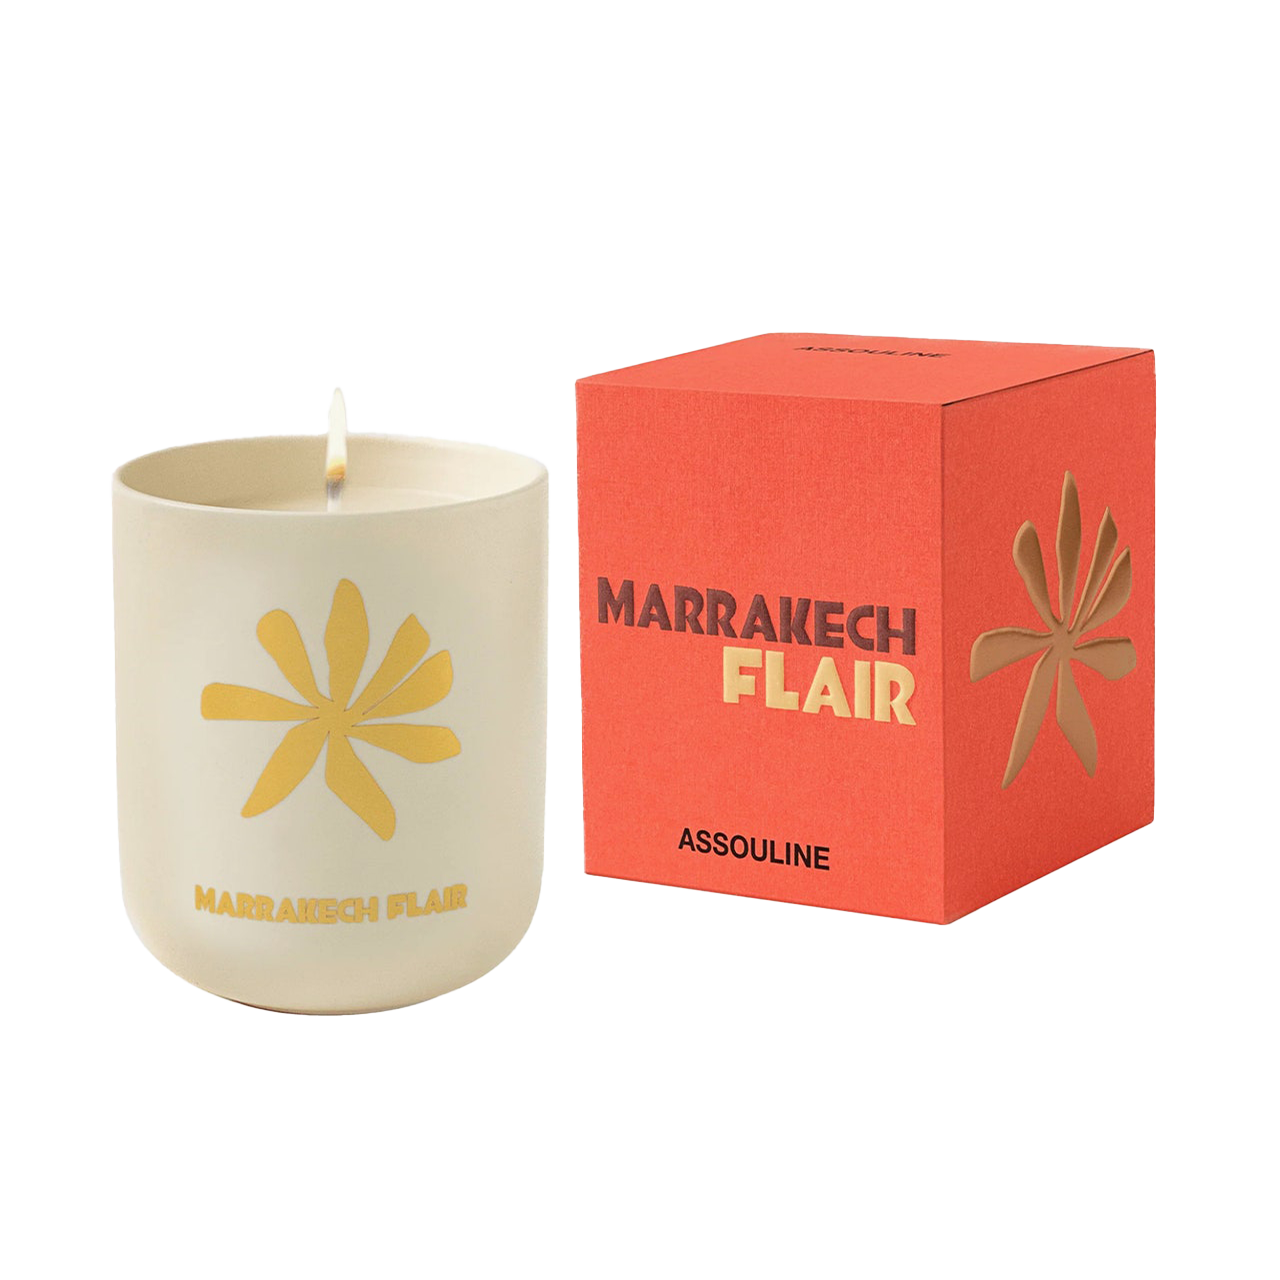 Assouline Marrakech Flair home candle